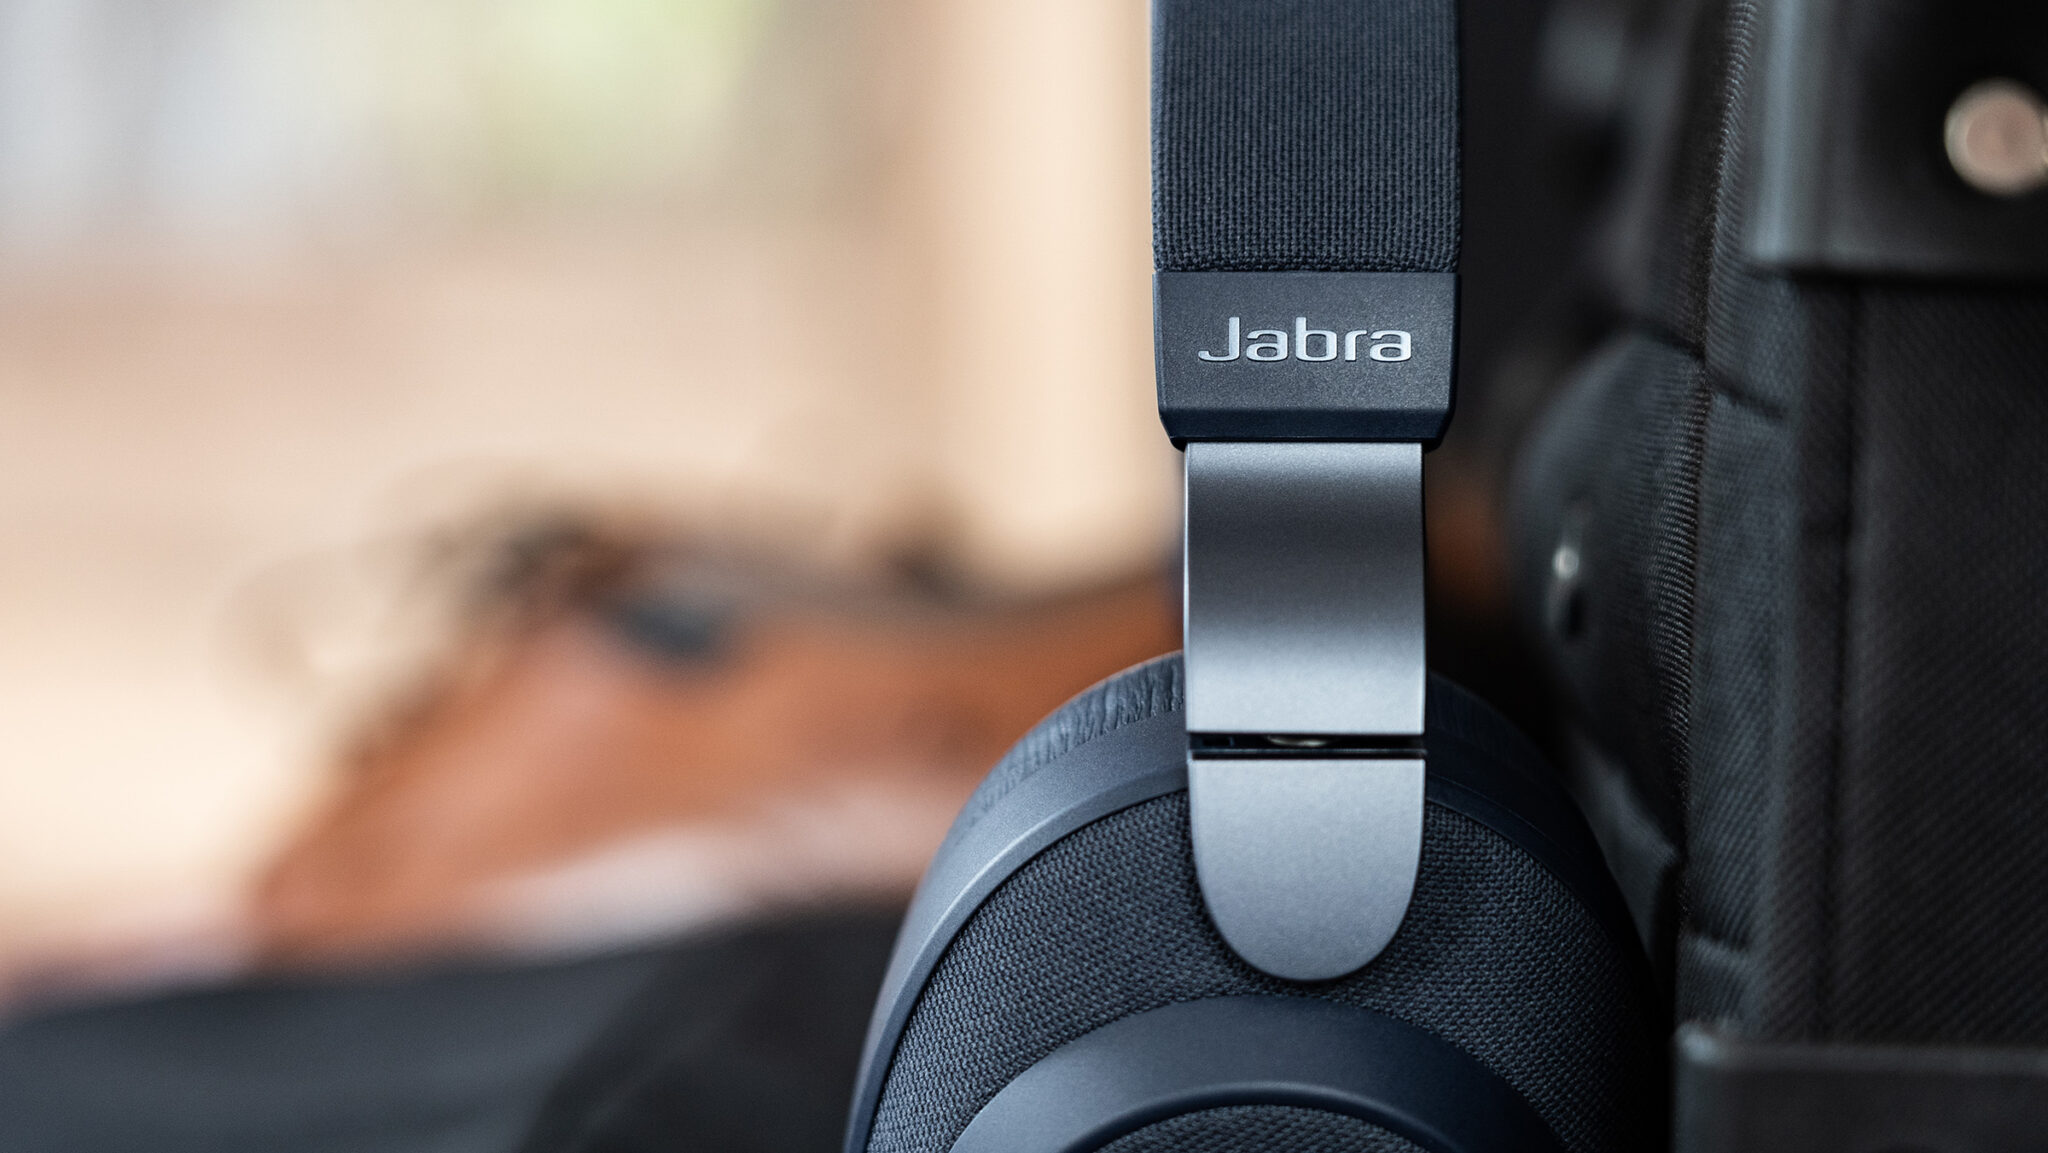 Jabra Elite 85h ANC Headset Details